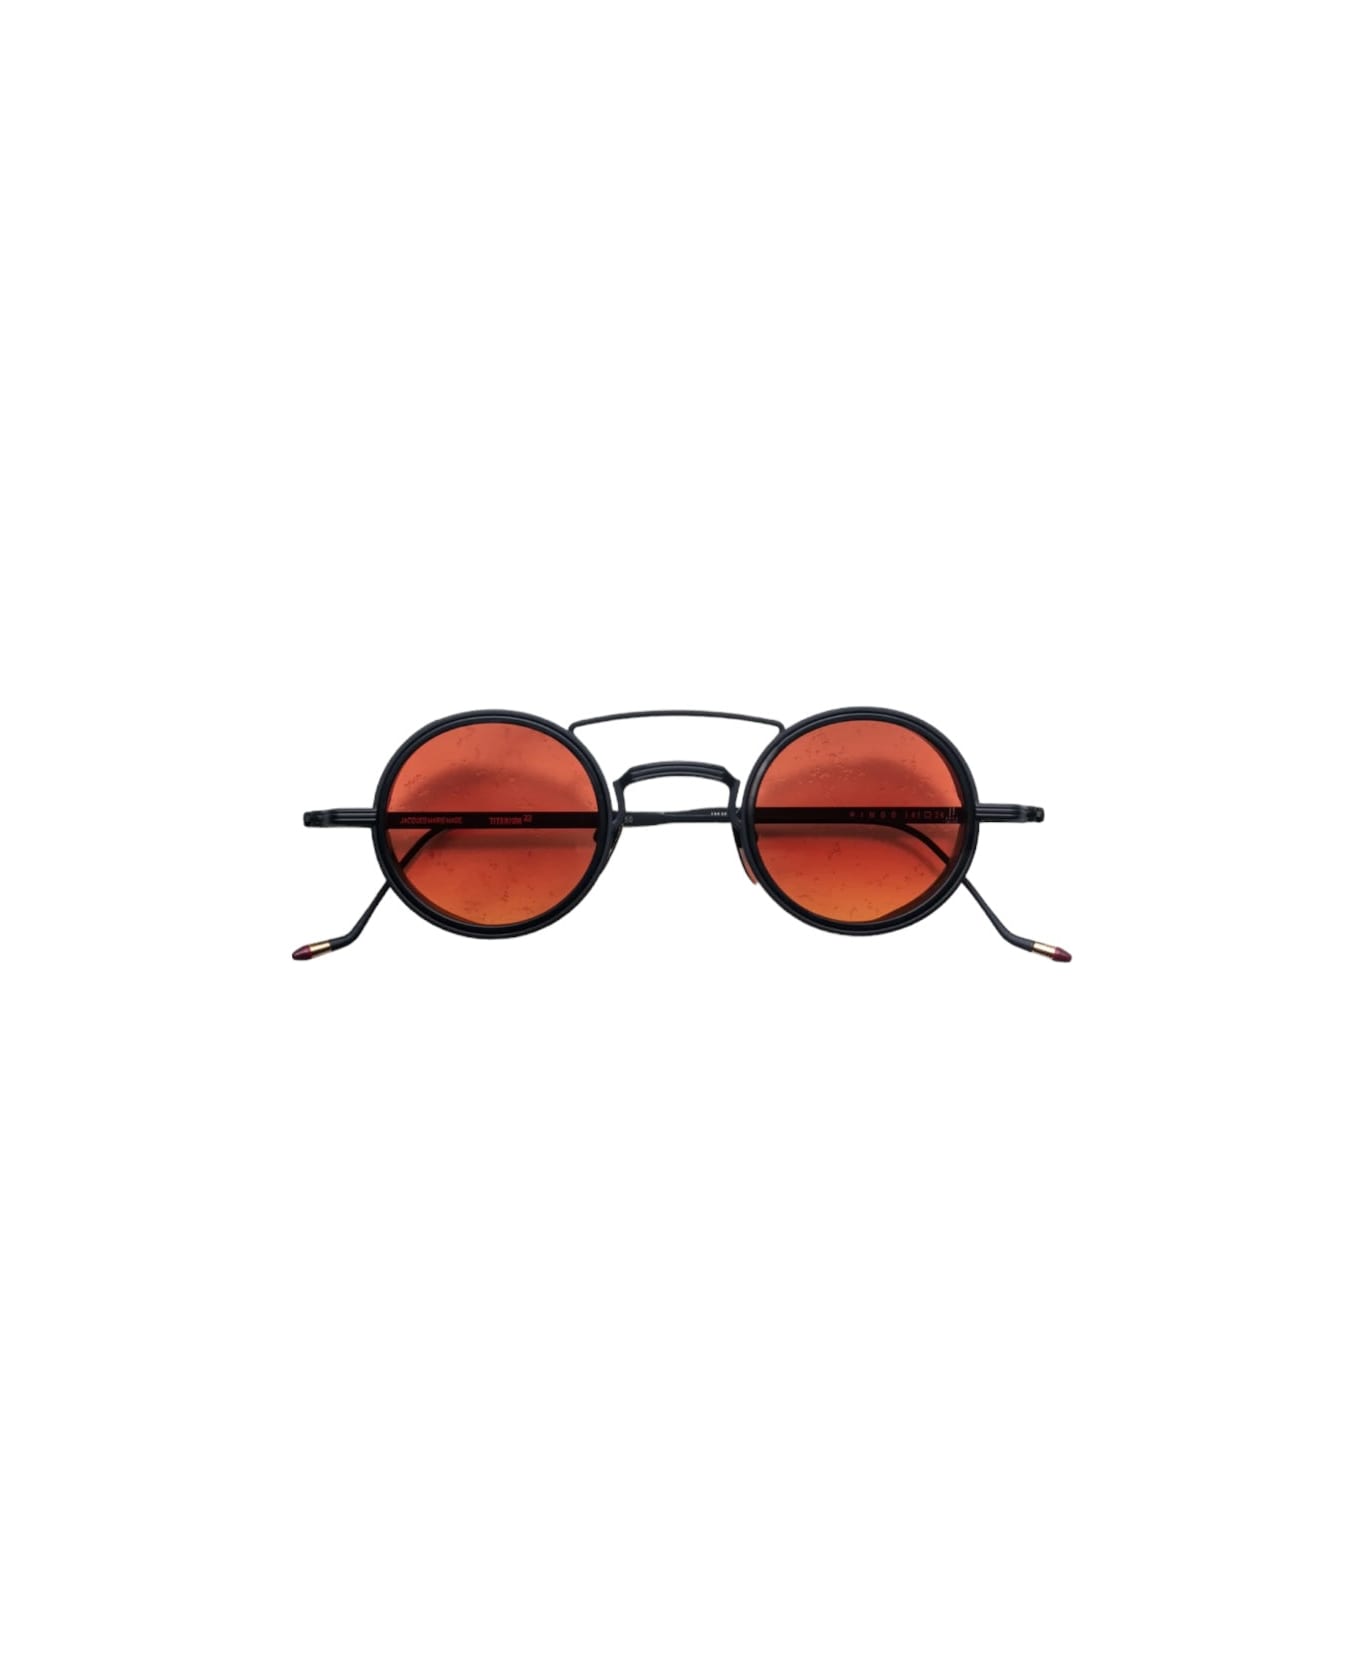 Jacques Marie Mage Ringo - Tropic Sunglasses サングラス